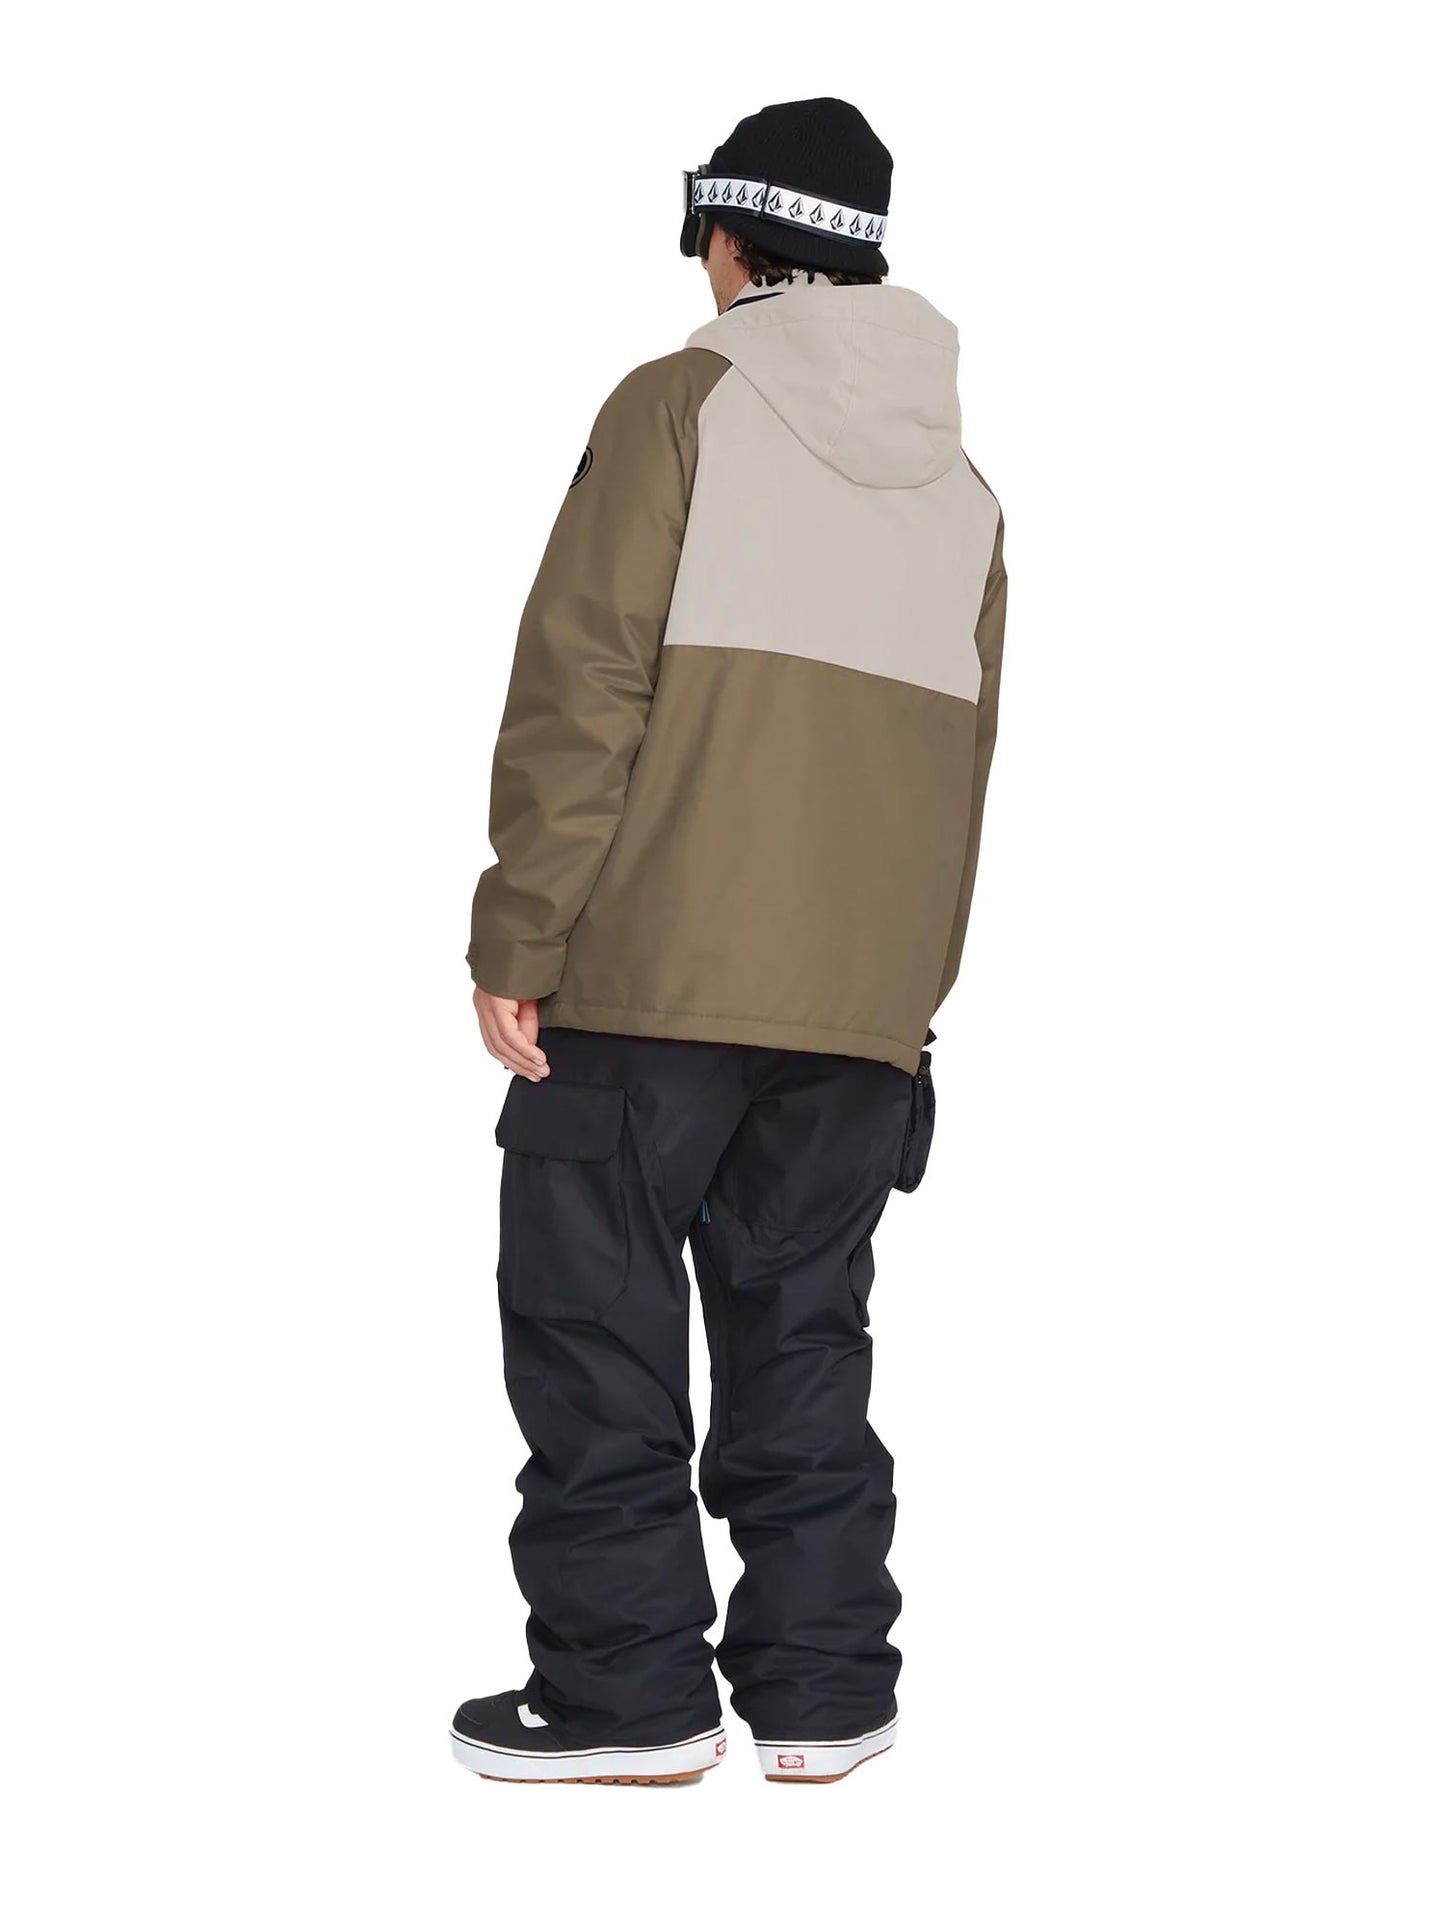 Volcom 2836 Insulated ski jacket, tan and brown